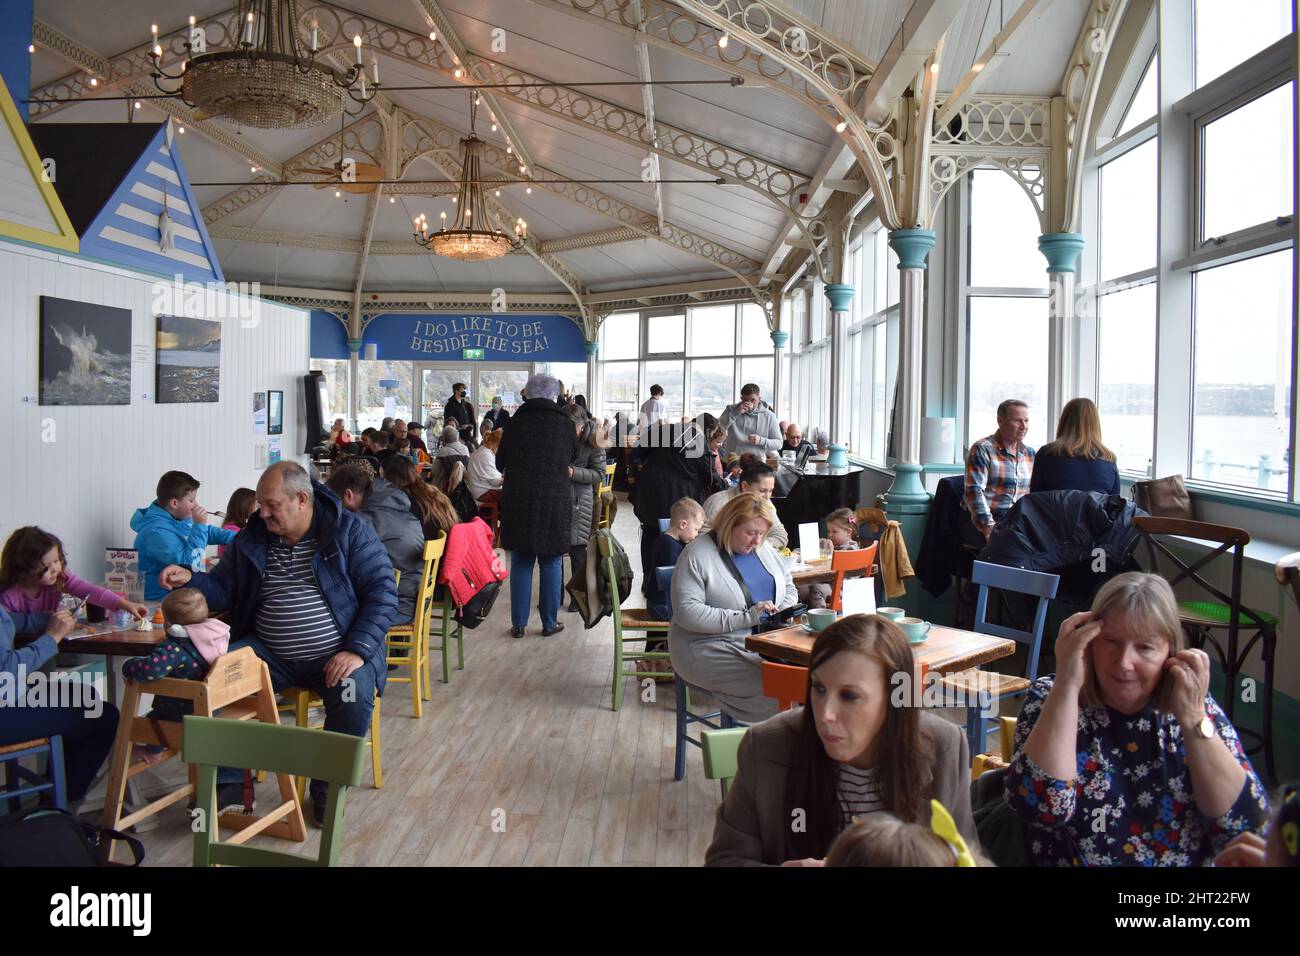 Inside Mumbles pier beach hut cafe, Mumbles, Swansea, Wales Stock Photo